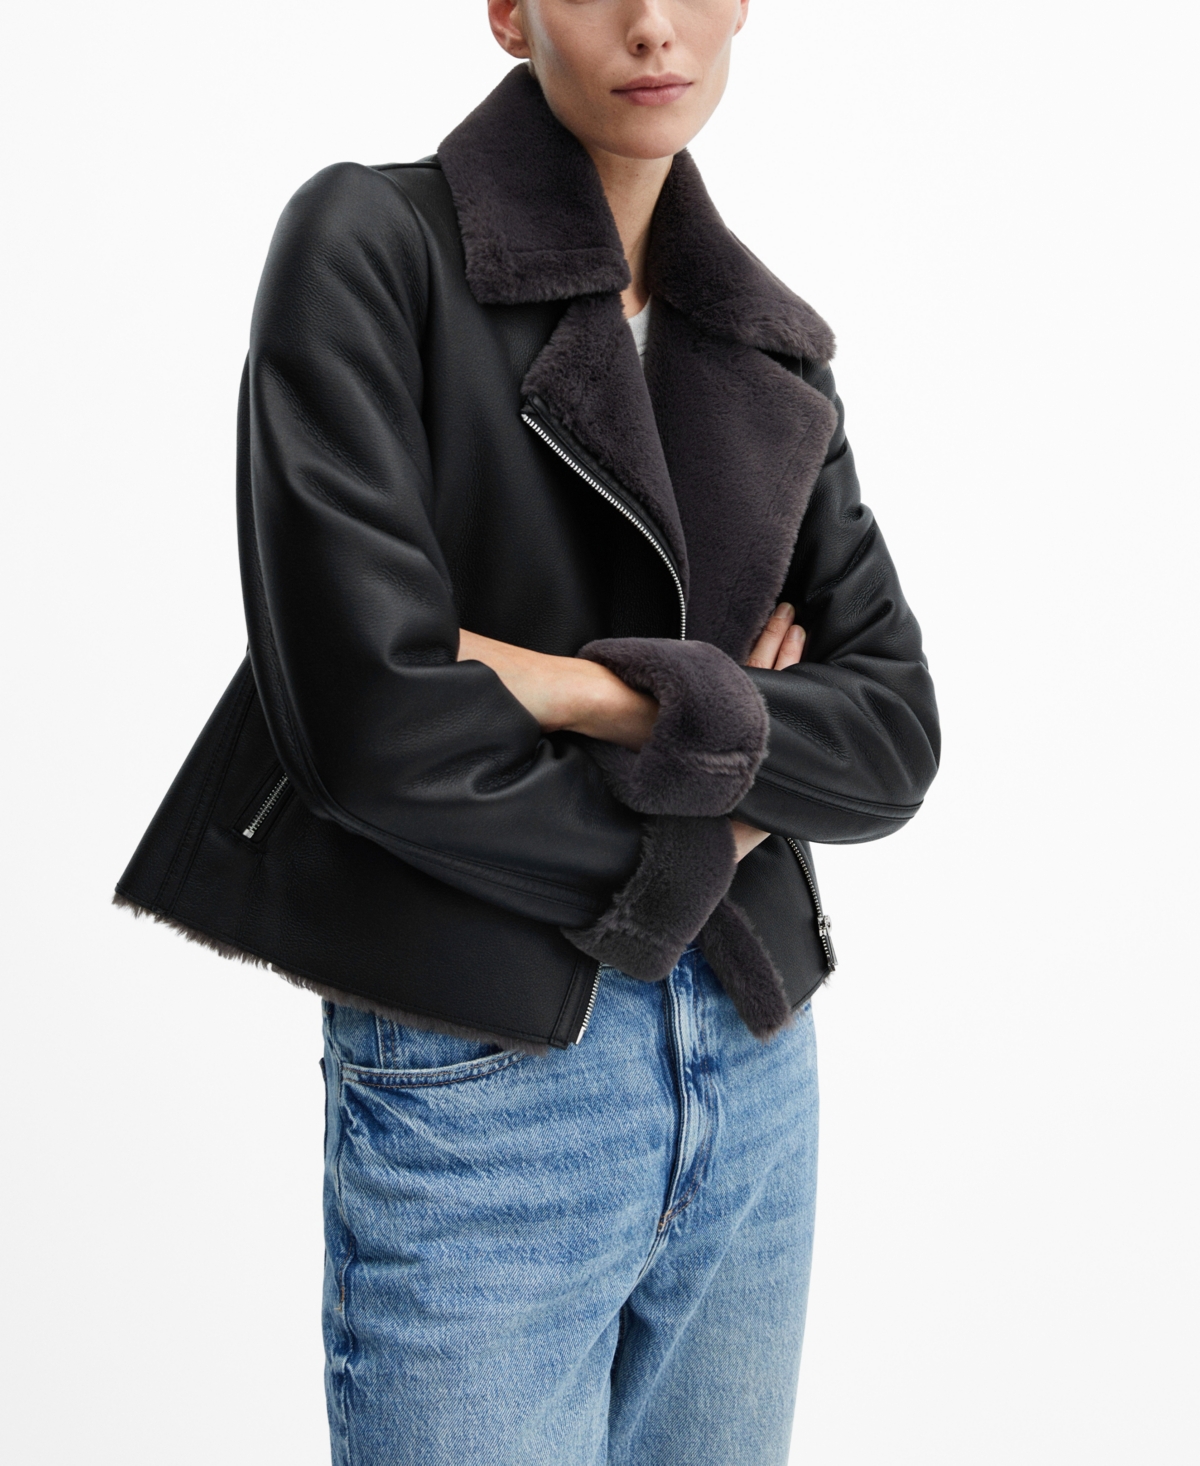 Women's Oversized Leather-Effect Jacket - Black